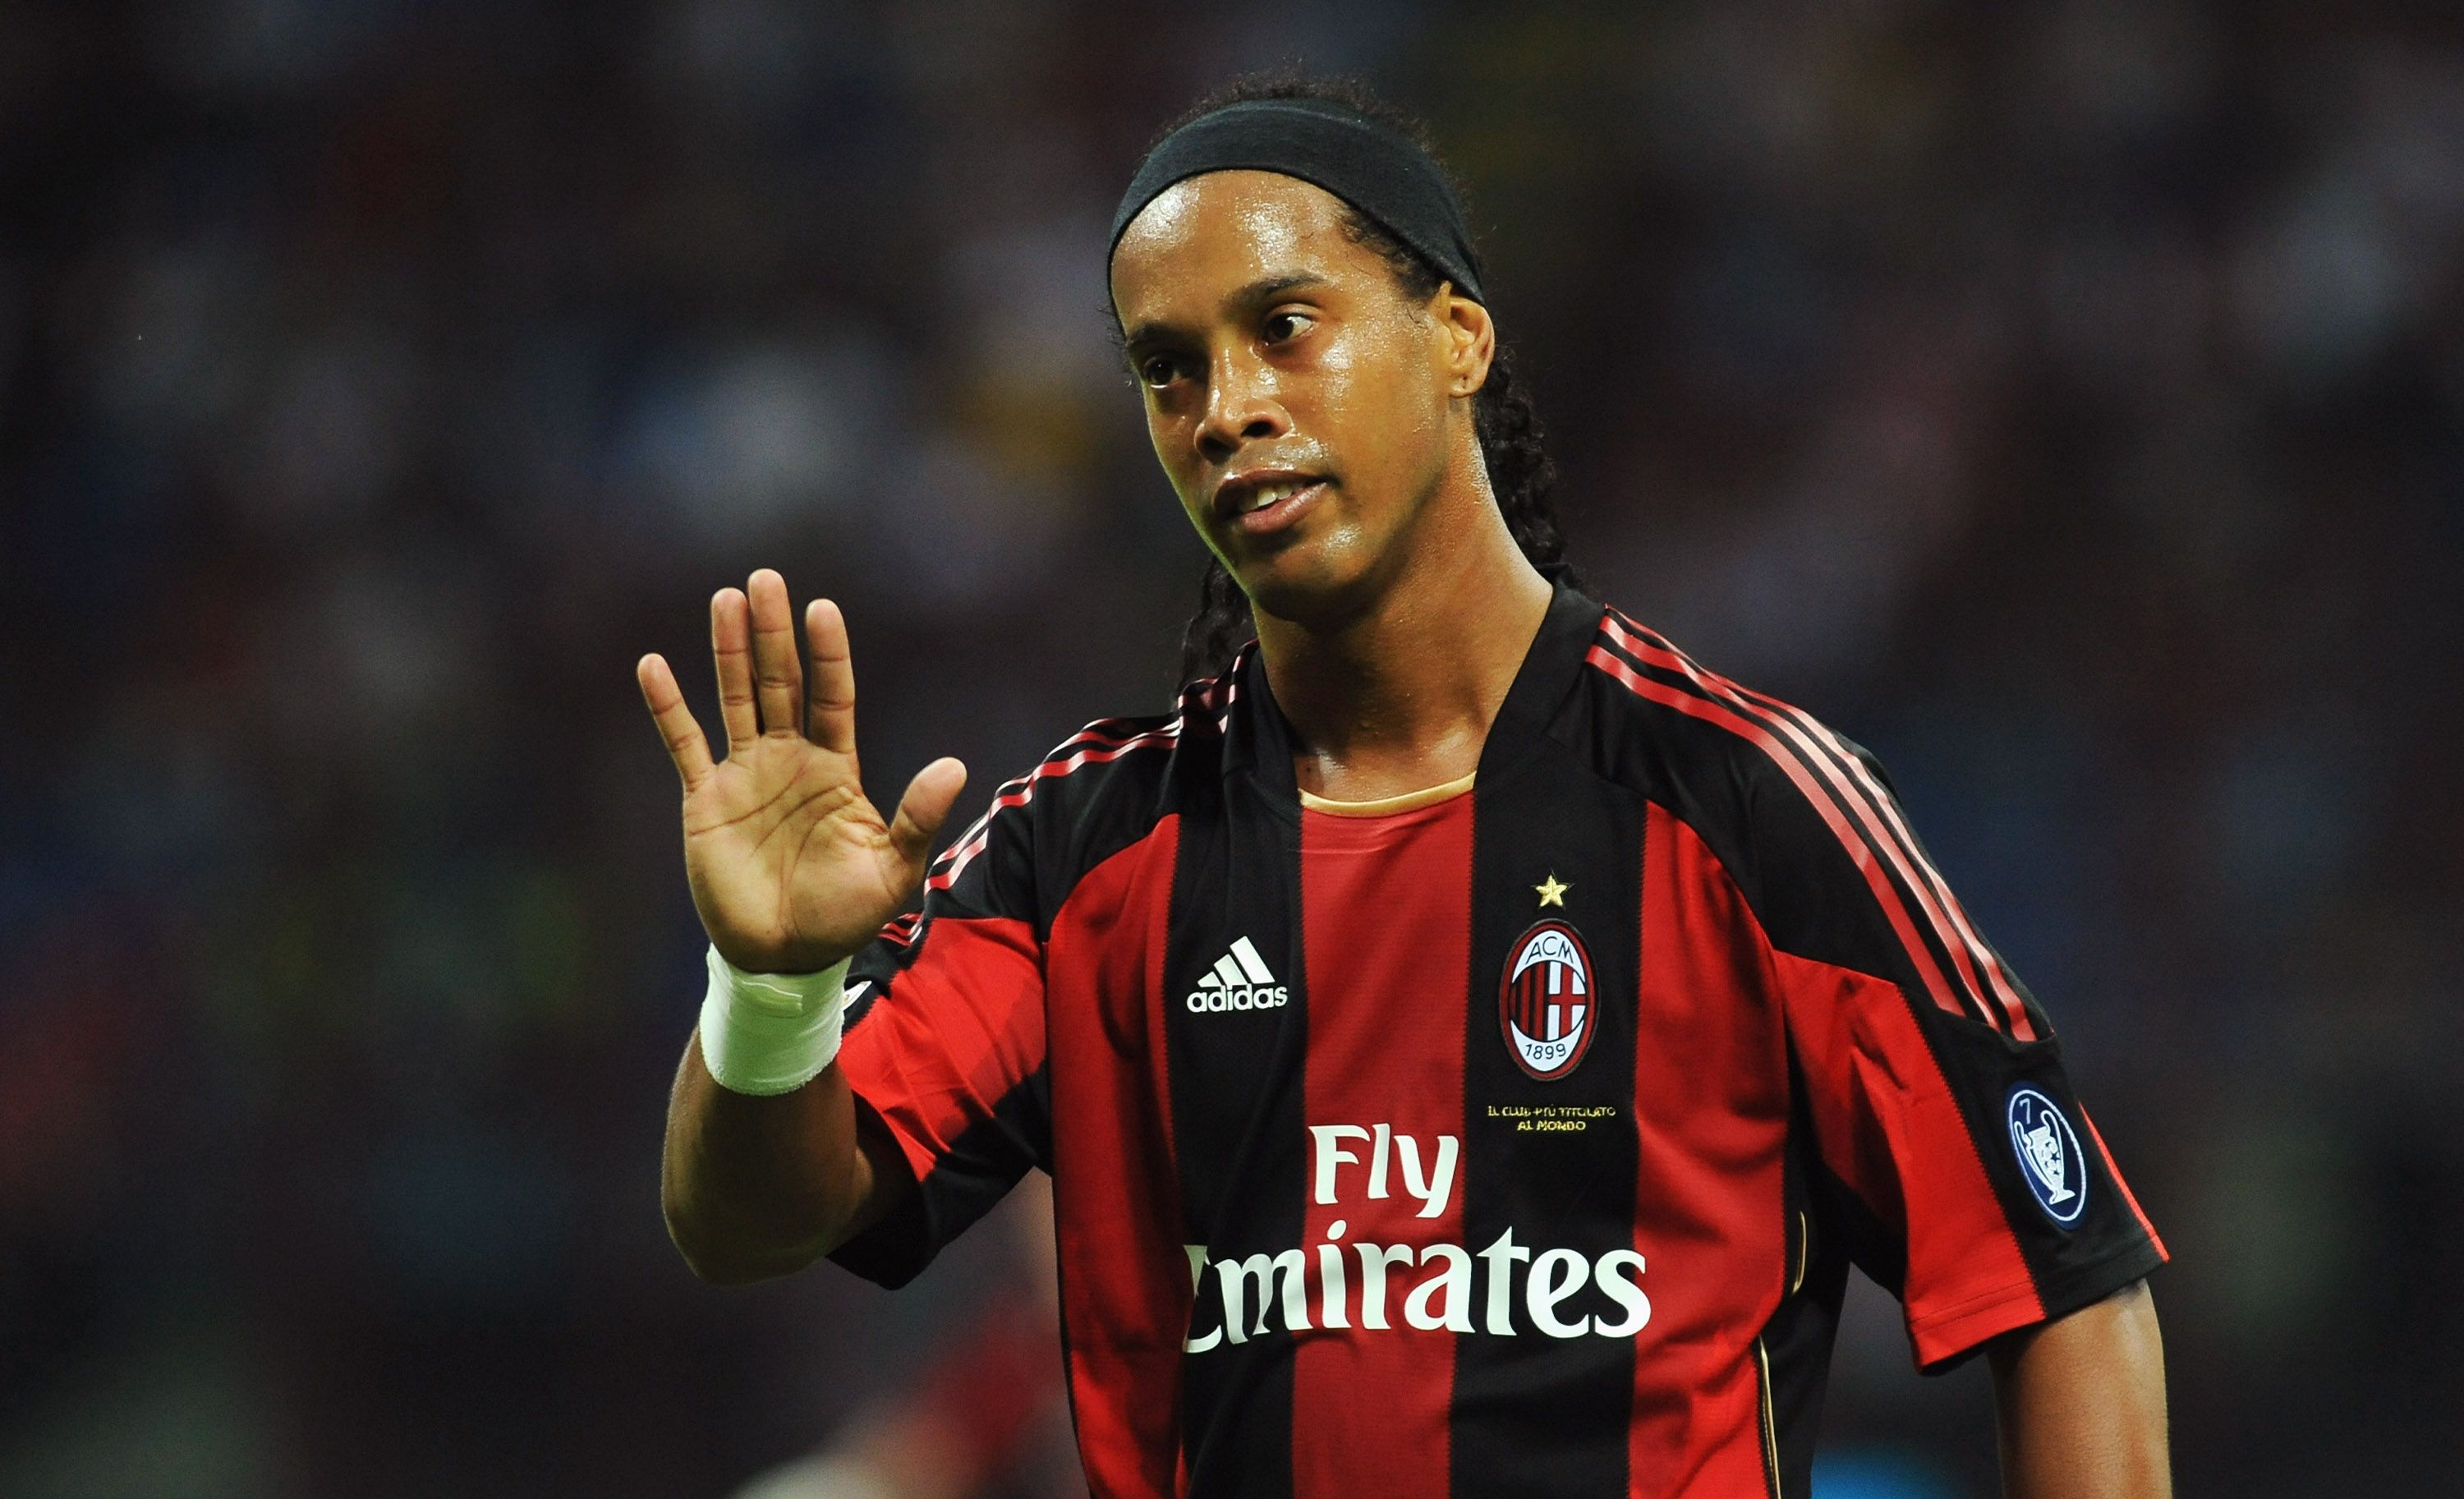 Ronaldinho left Milan half way through the 2010/11 season